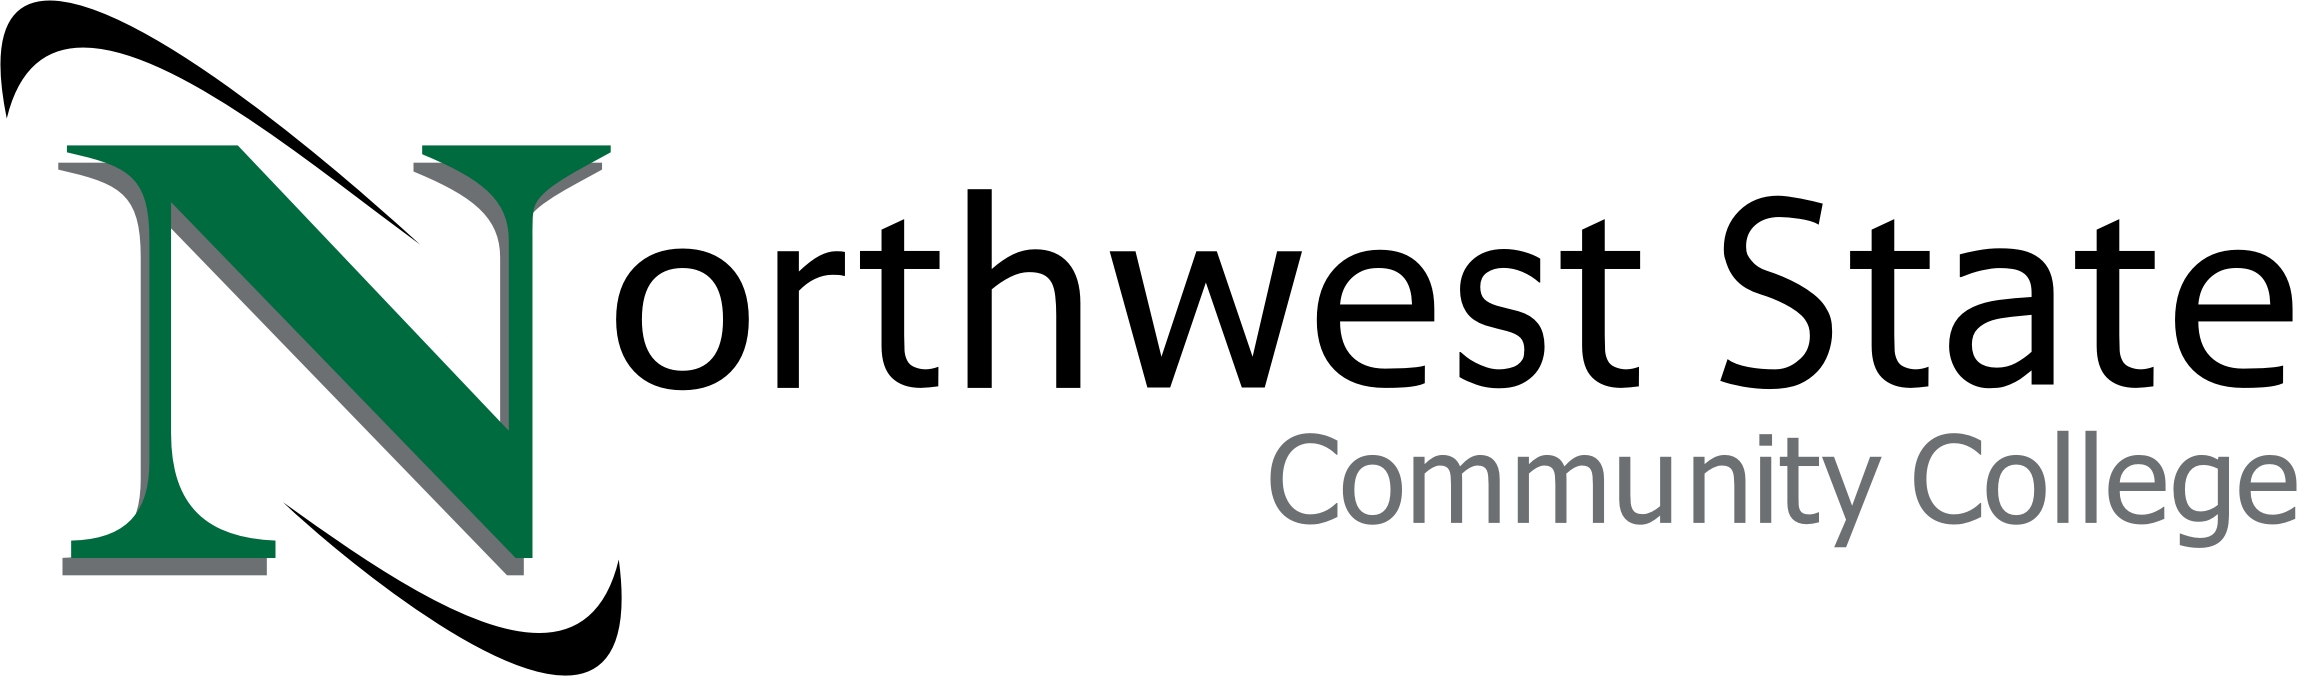 Northwest State Community College 12